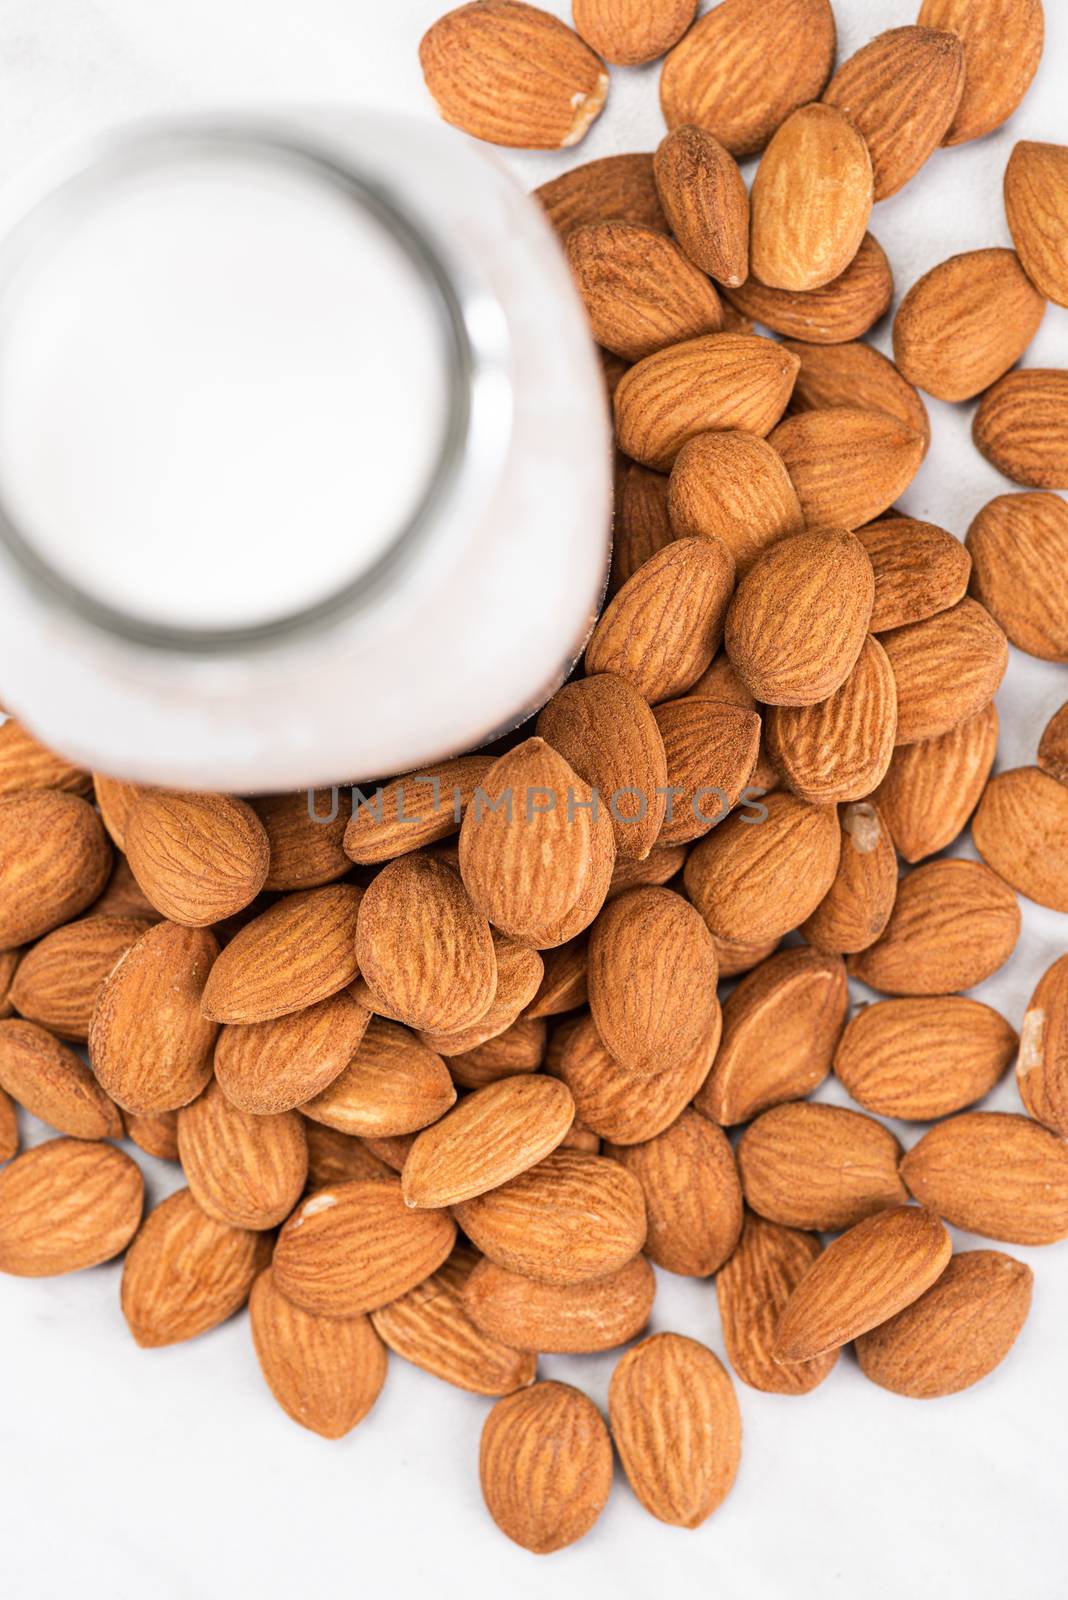 Alternative Non Dairy Almond Milk. Diet and Nutrition Concept by merc67